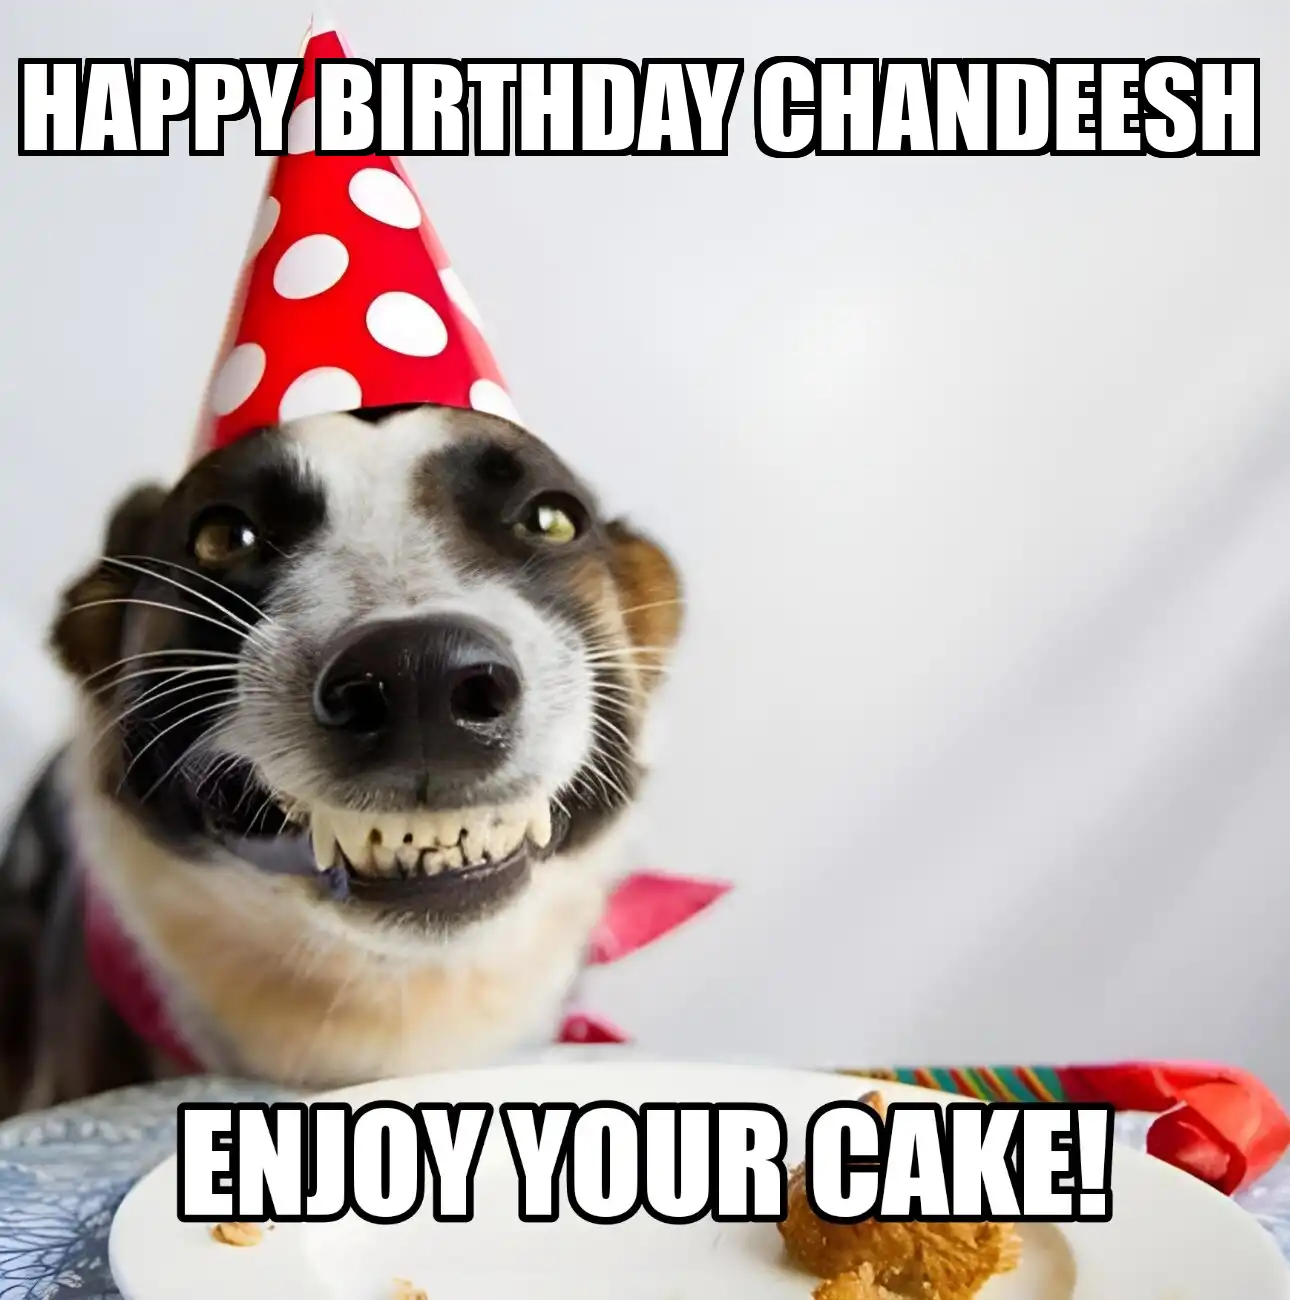 Happy Birthday Chandeesh Enjoy Your Cake Dog Meme